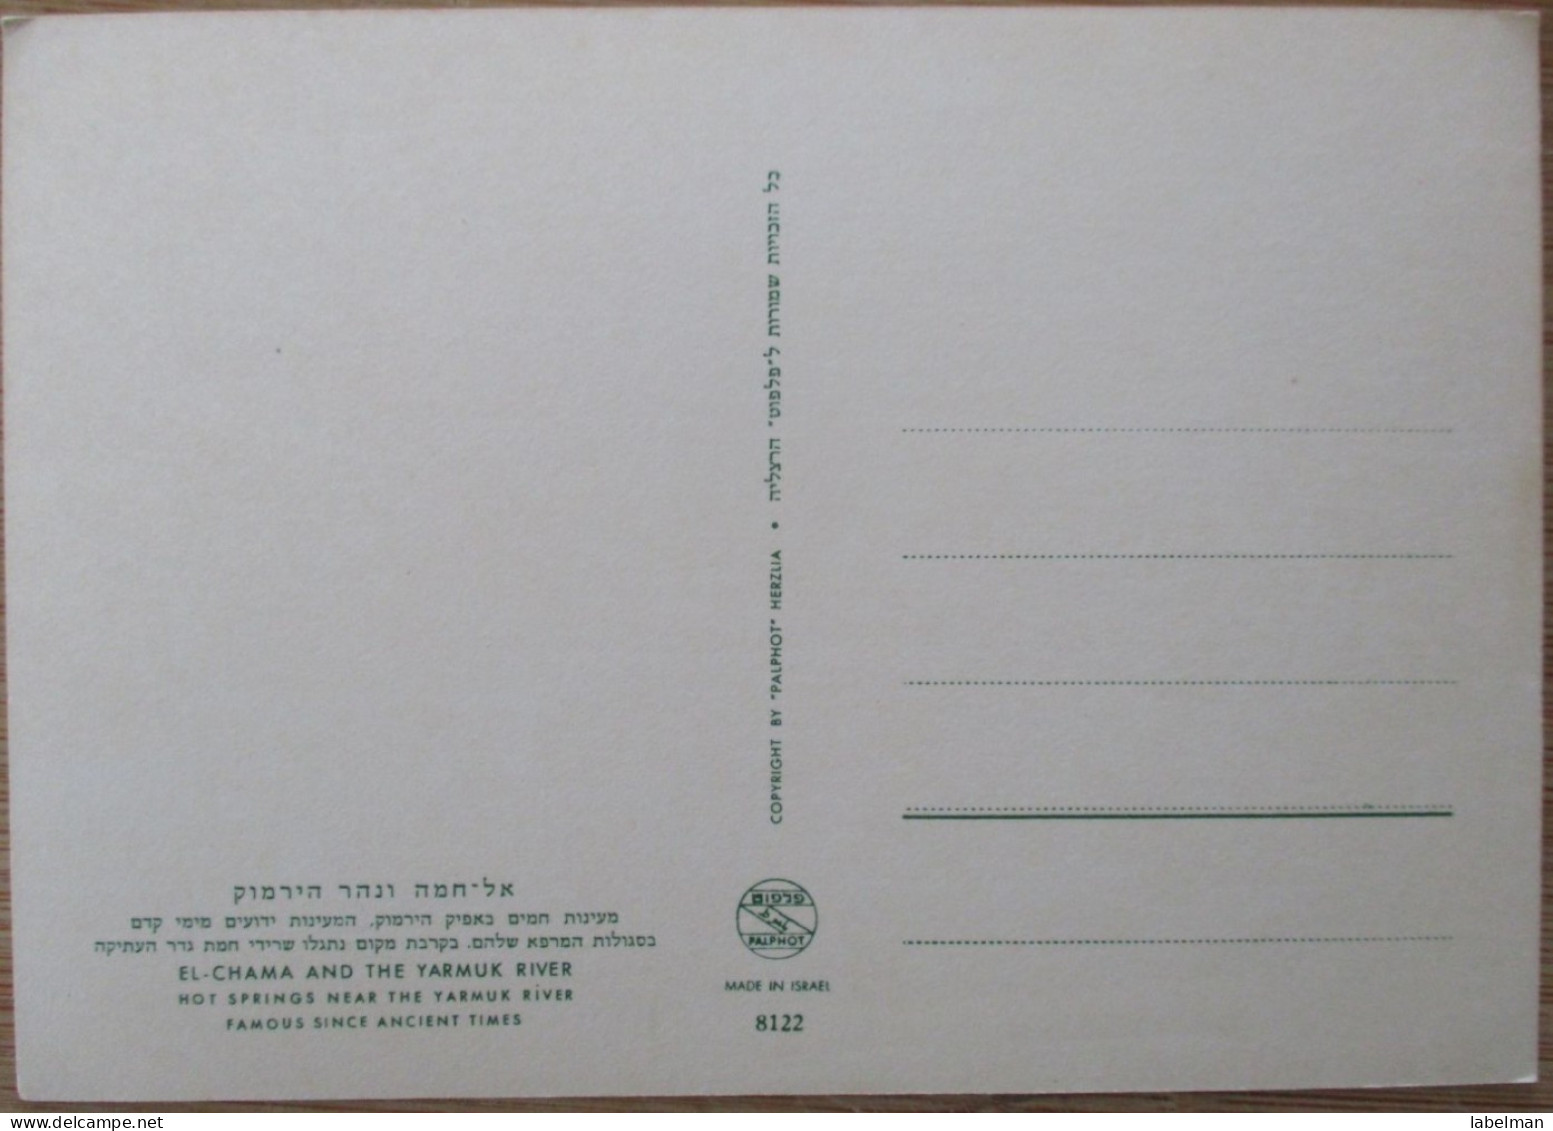 ISRAEL EL CHAMA TIBERIAS JORDAN RIVER POSTCARD CARD PC CP AK KARTE CARTE POSTALE CARTOLINA ANSICHTSKARTE POSTKARTE - Israel